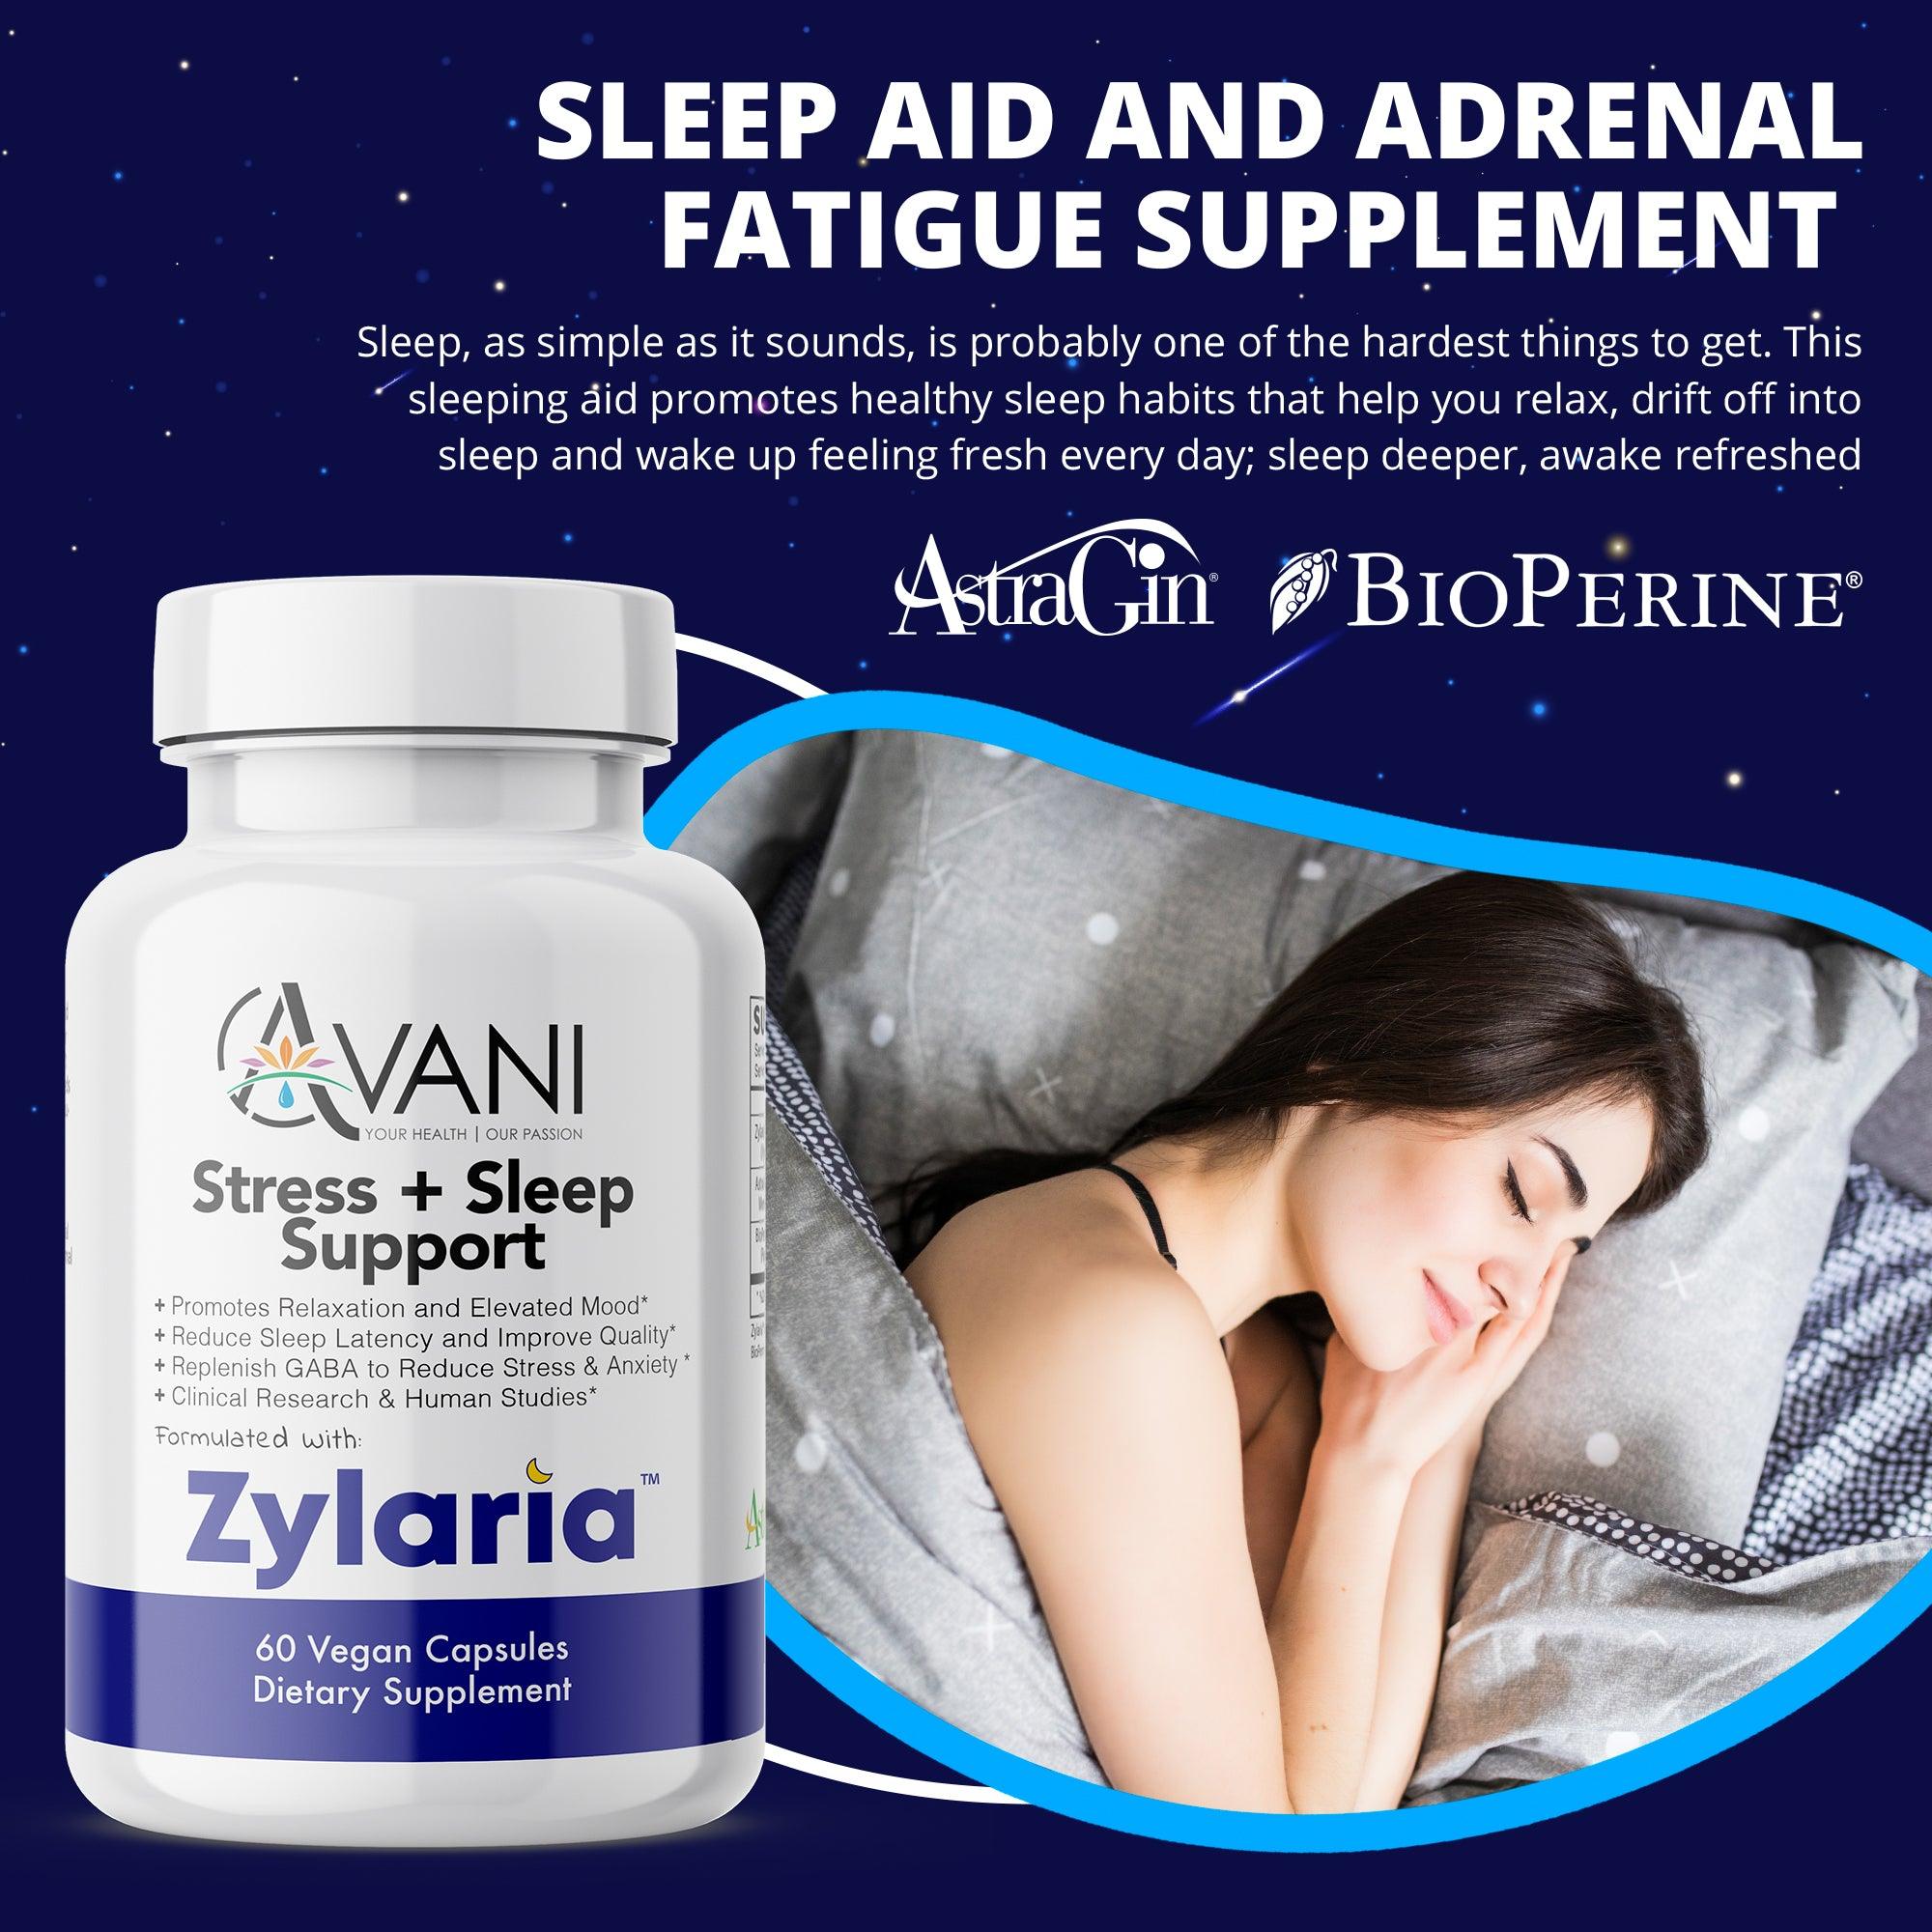 Zylaria® Stress + Sleep Support - Avani Wellness